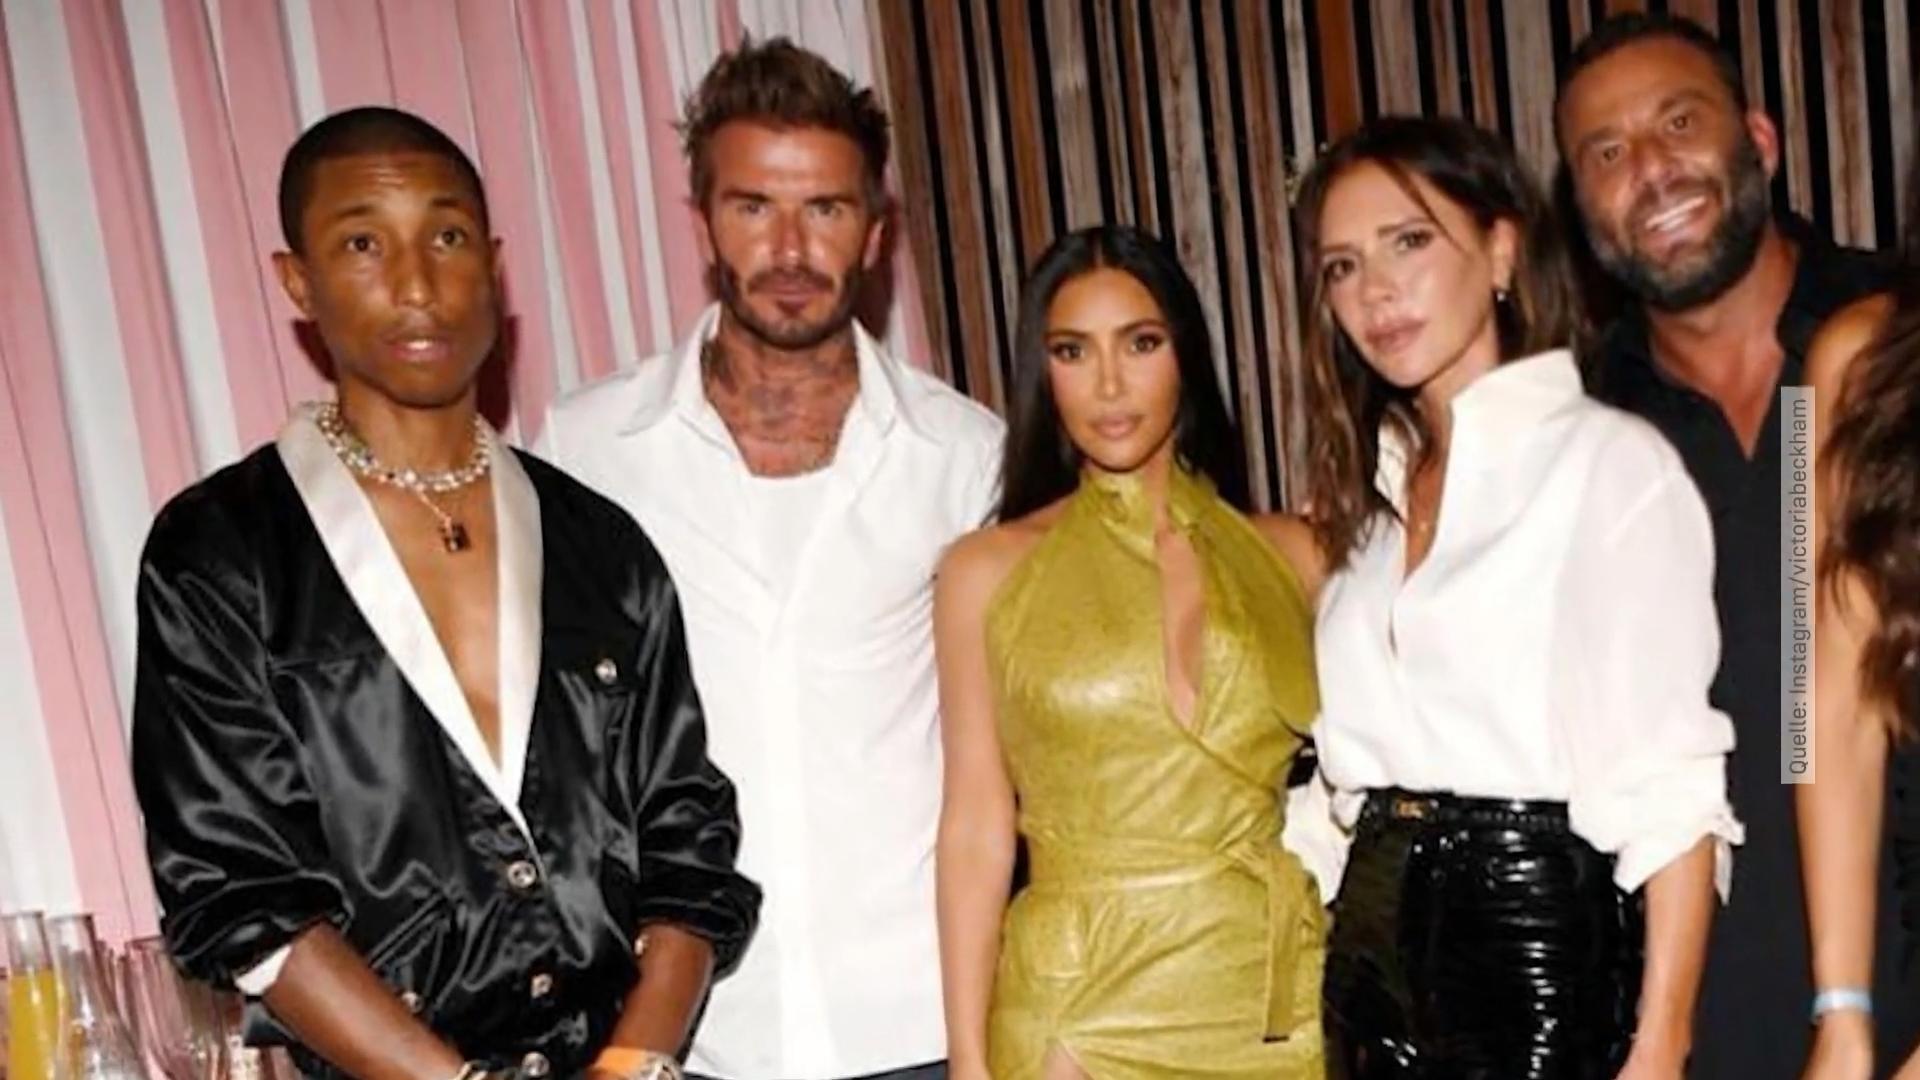 Kim Kardashian, Beckhams & Co. feiern auf Party in Miami Hoteleröffnung trotz Coroona